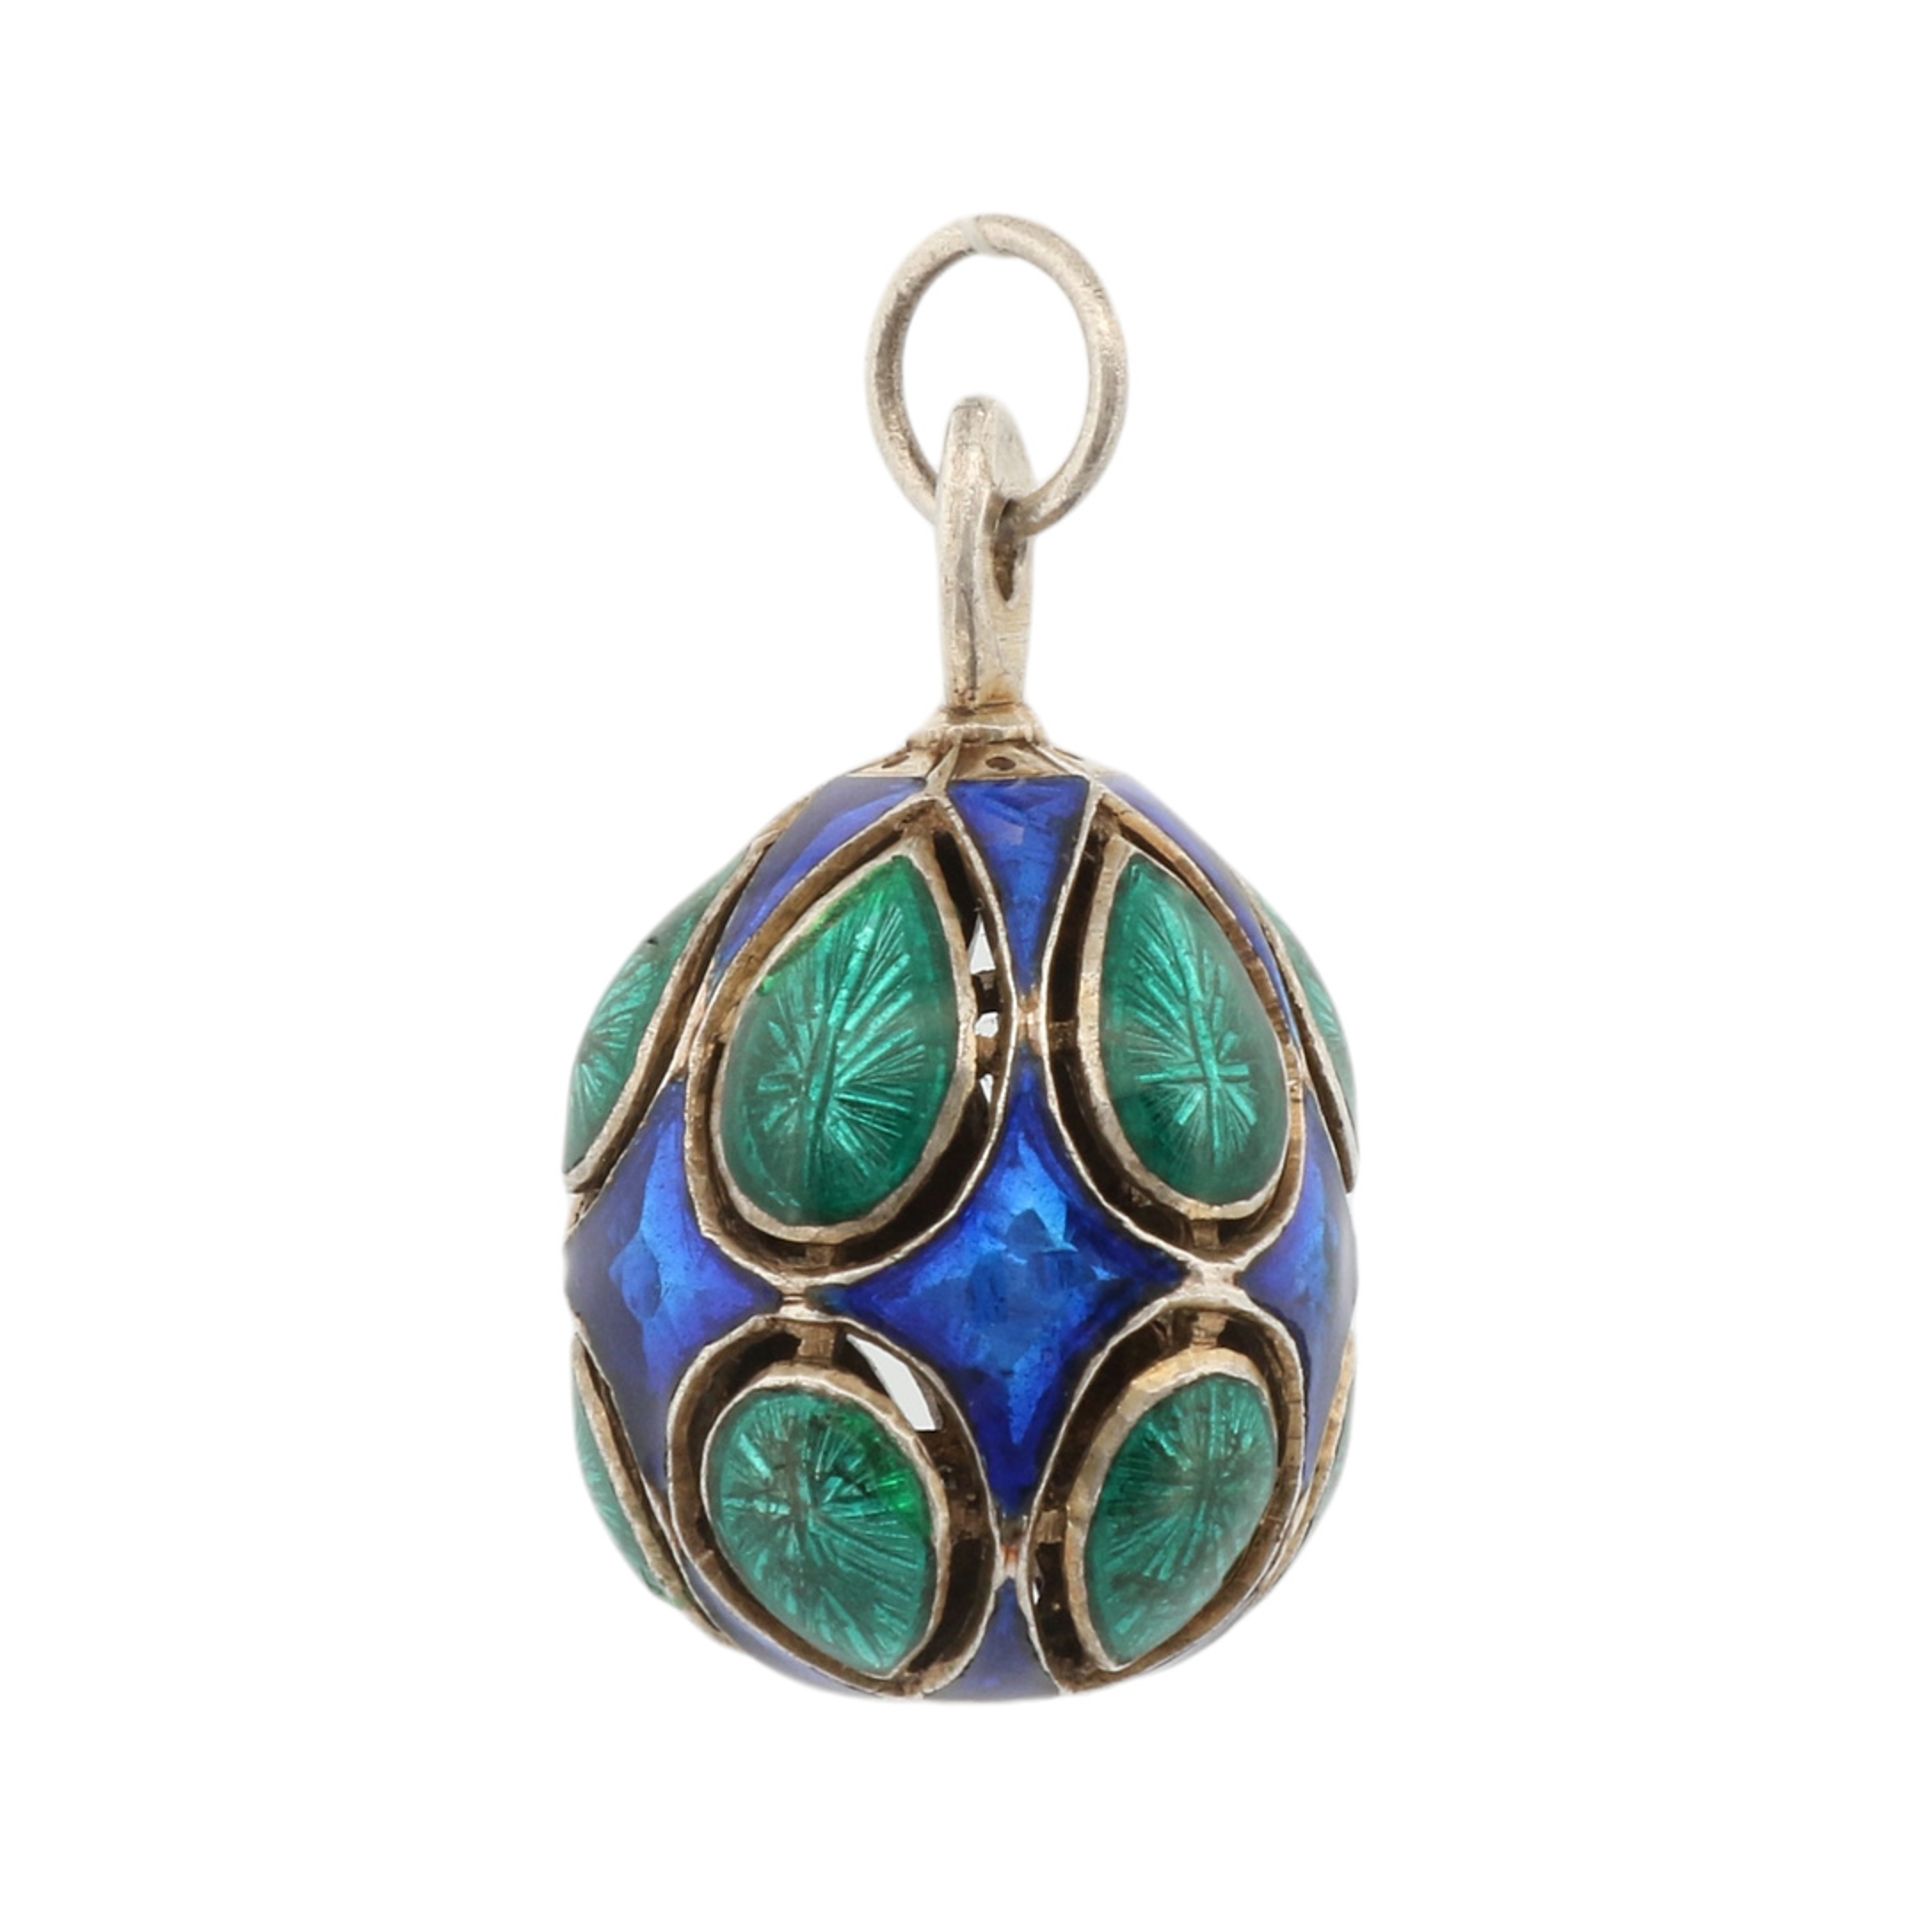 Egg-shaped pendant with Fabergé-style enamel